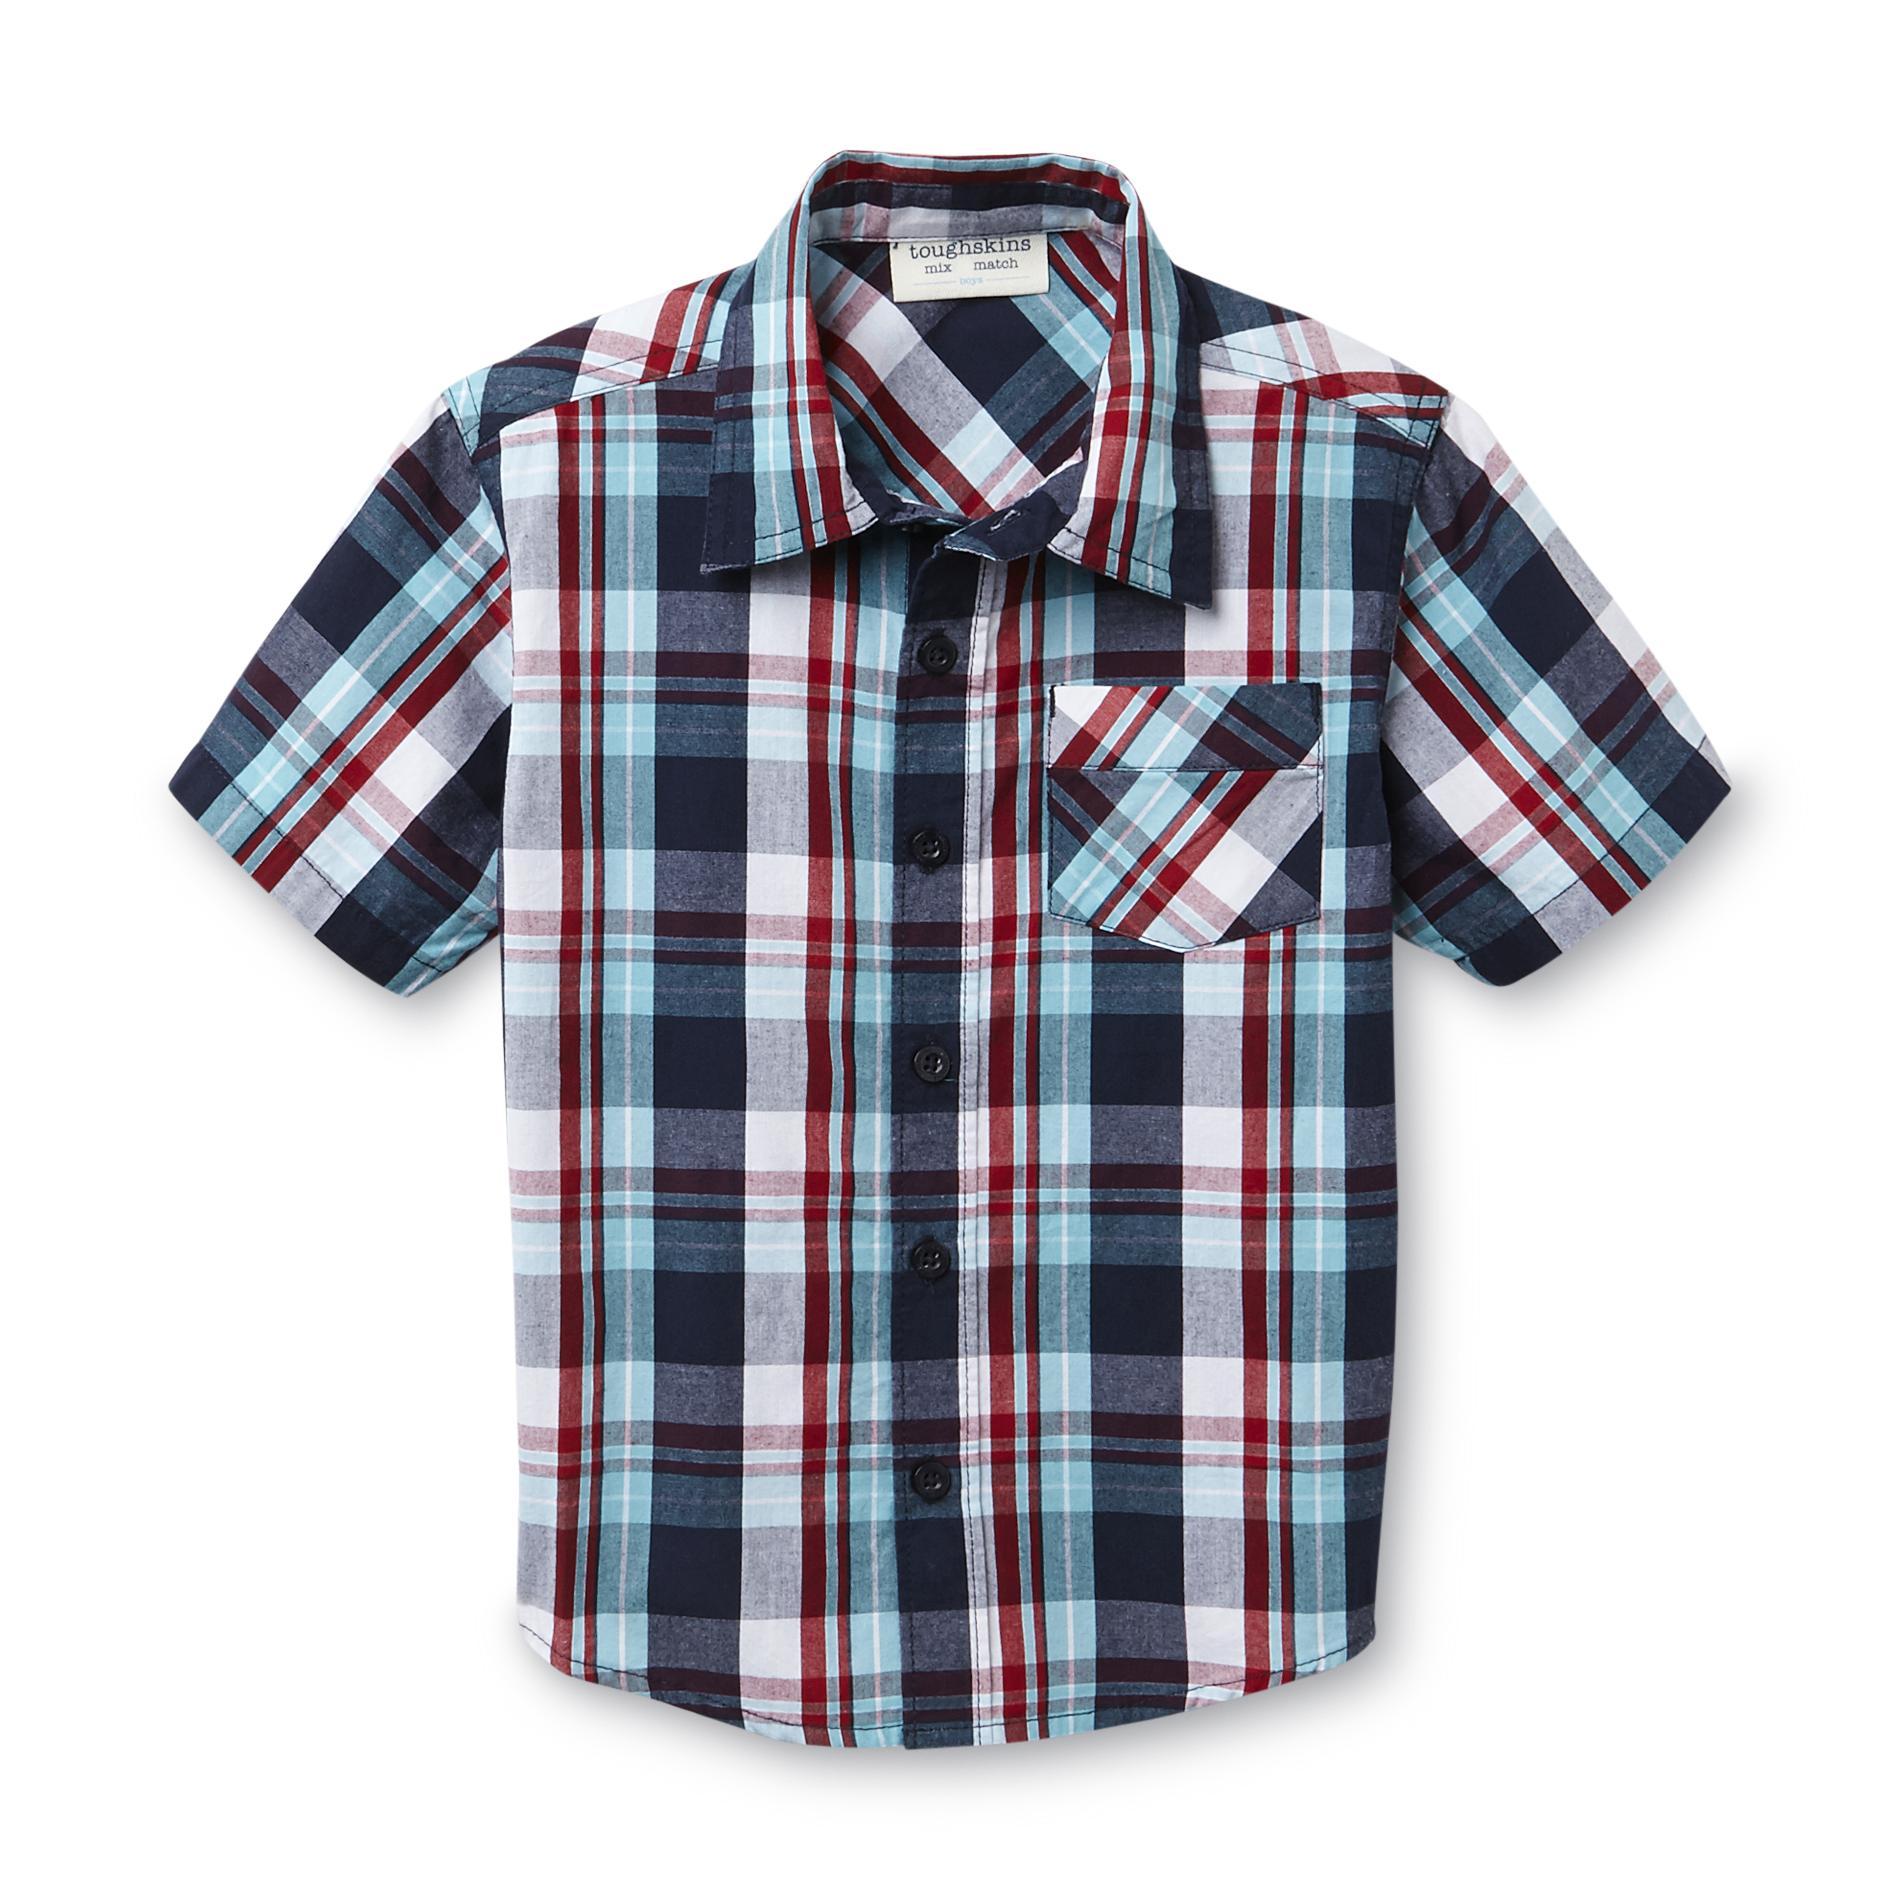 Toughskins Infant & Toddler Boy's Woven Short-Sleeve Shirt - Plaid